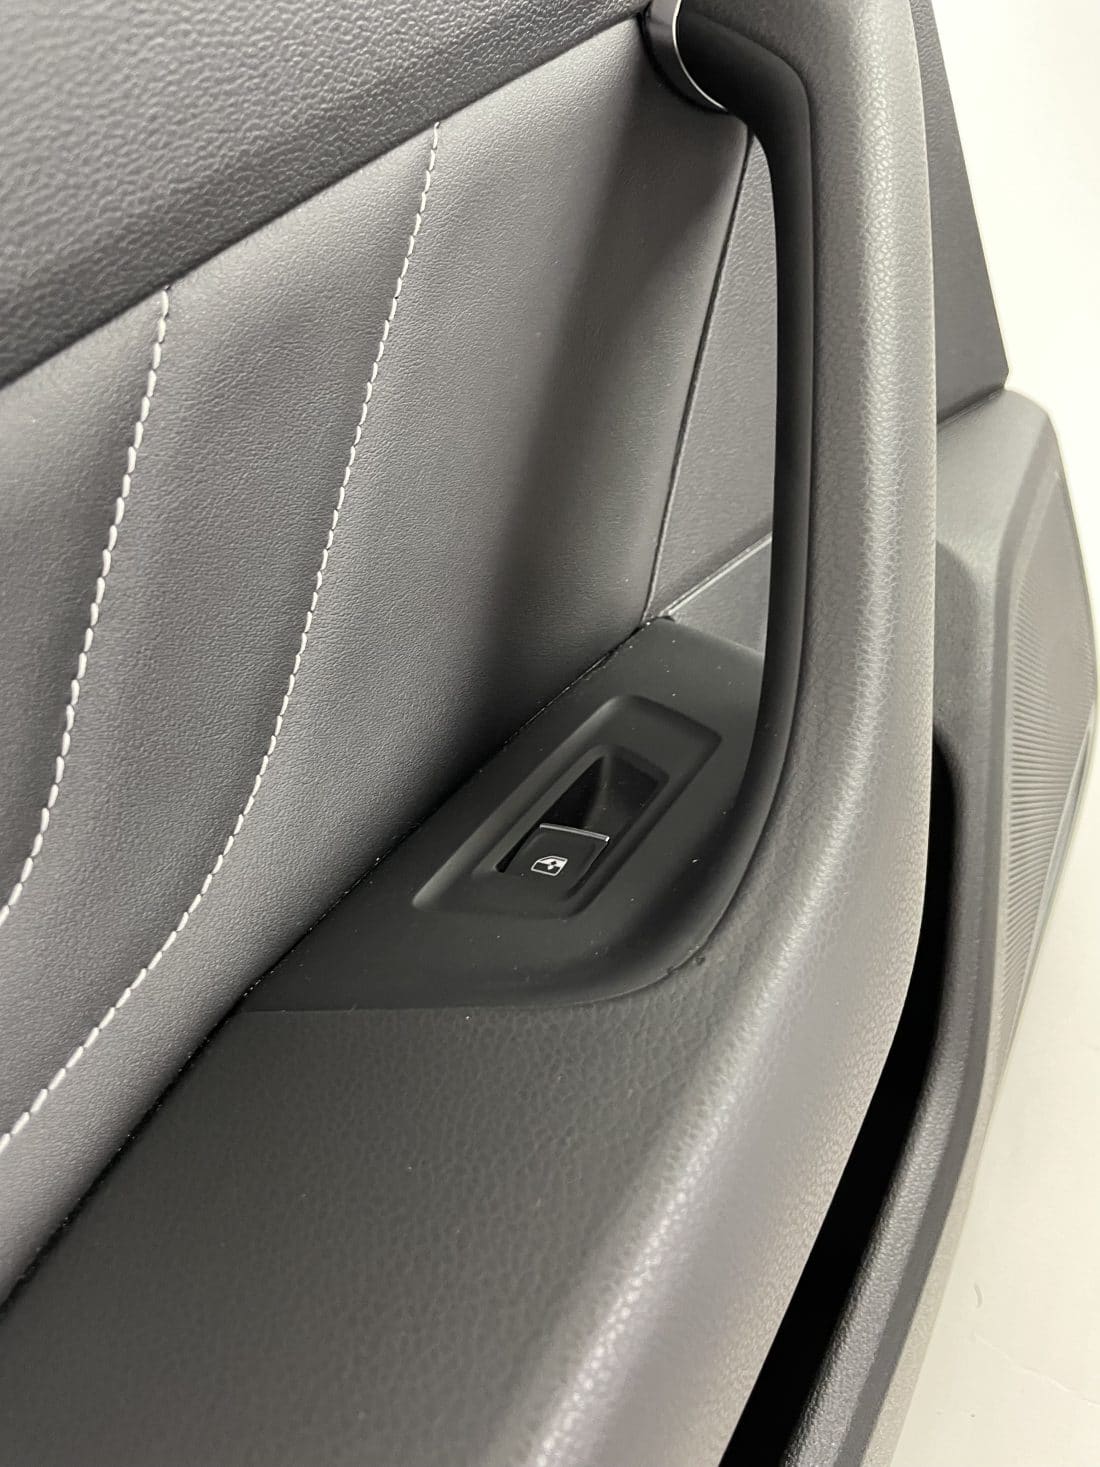 Interior Vw Golf 8 R Leather Black Grey Stitching